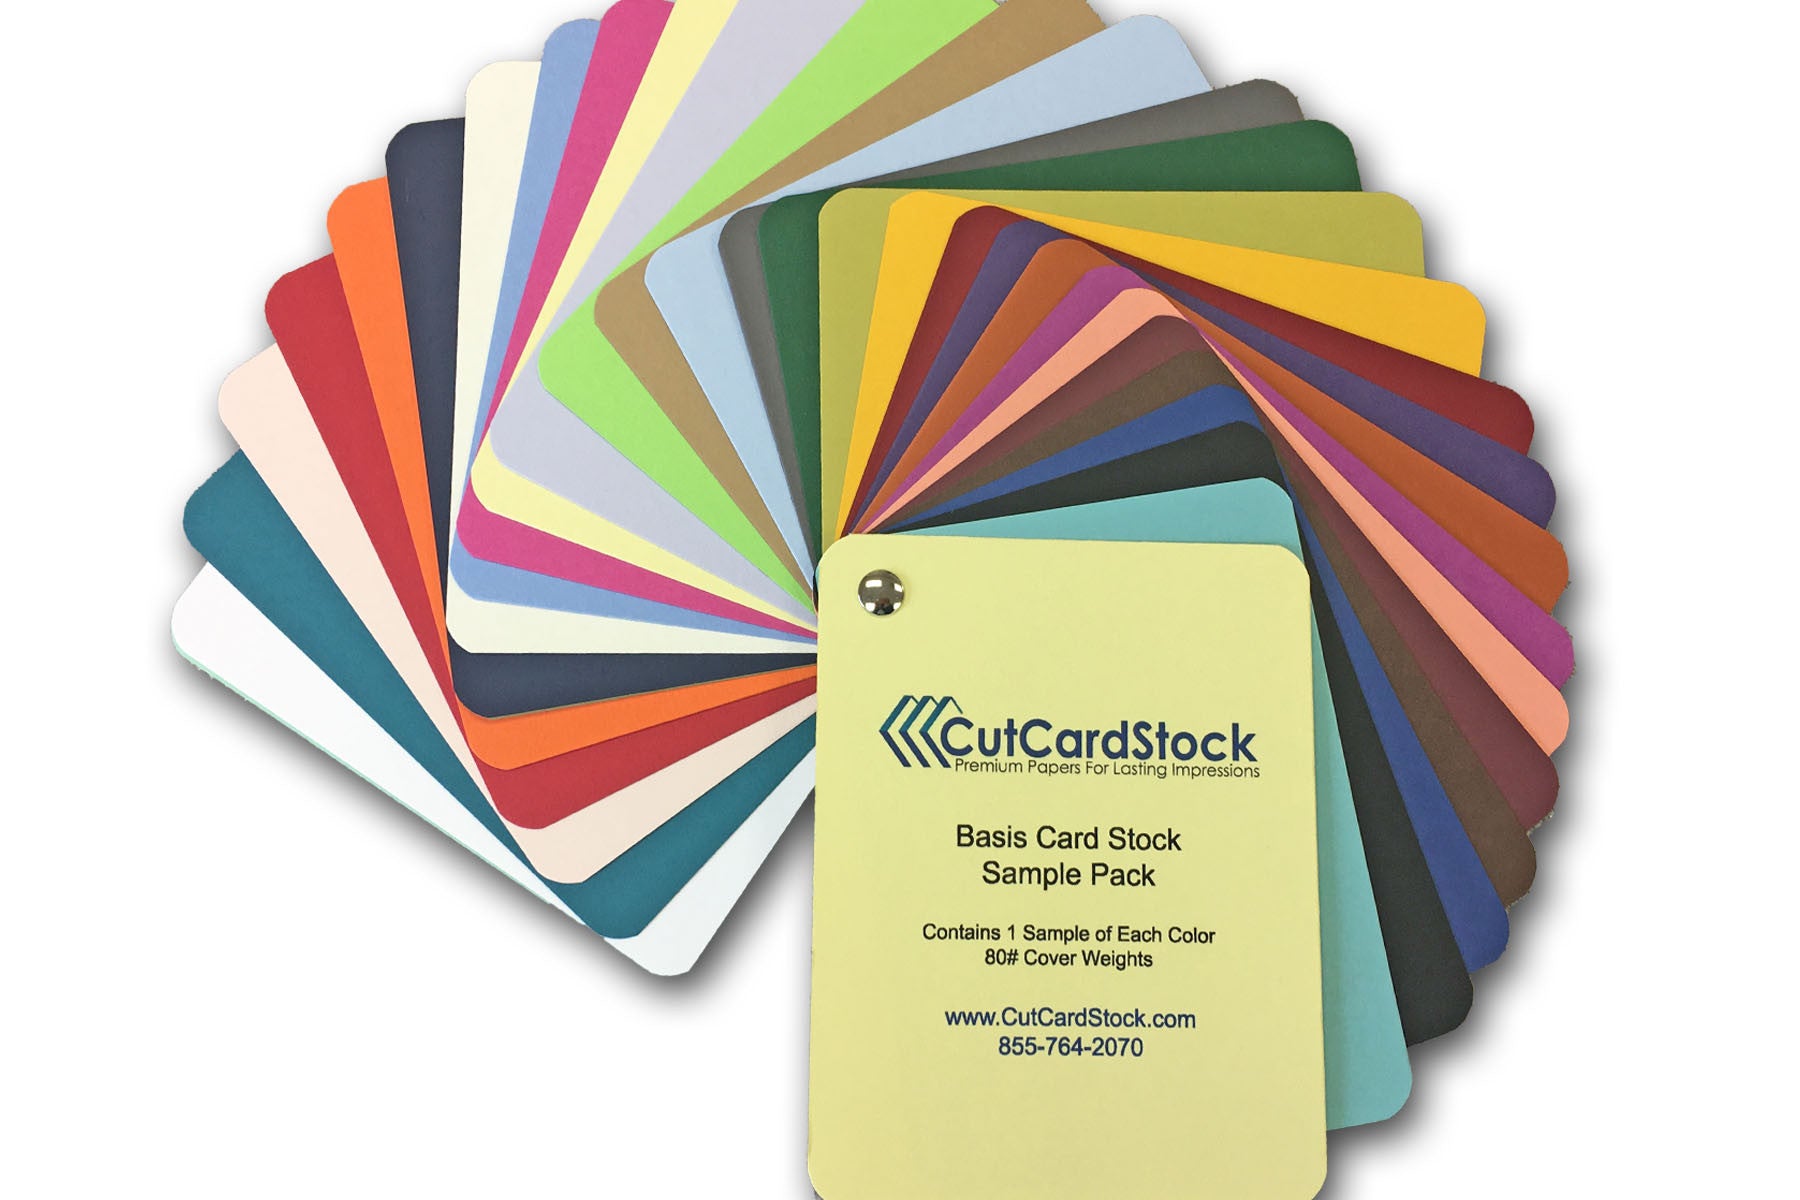 Cardstock stationery samples